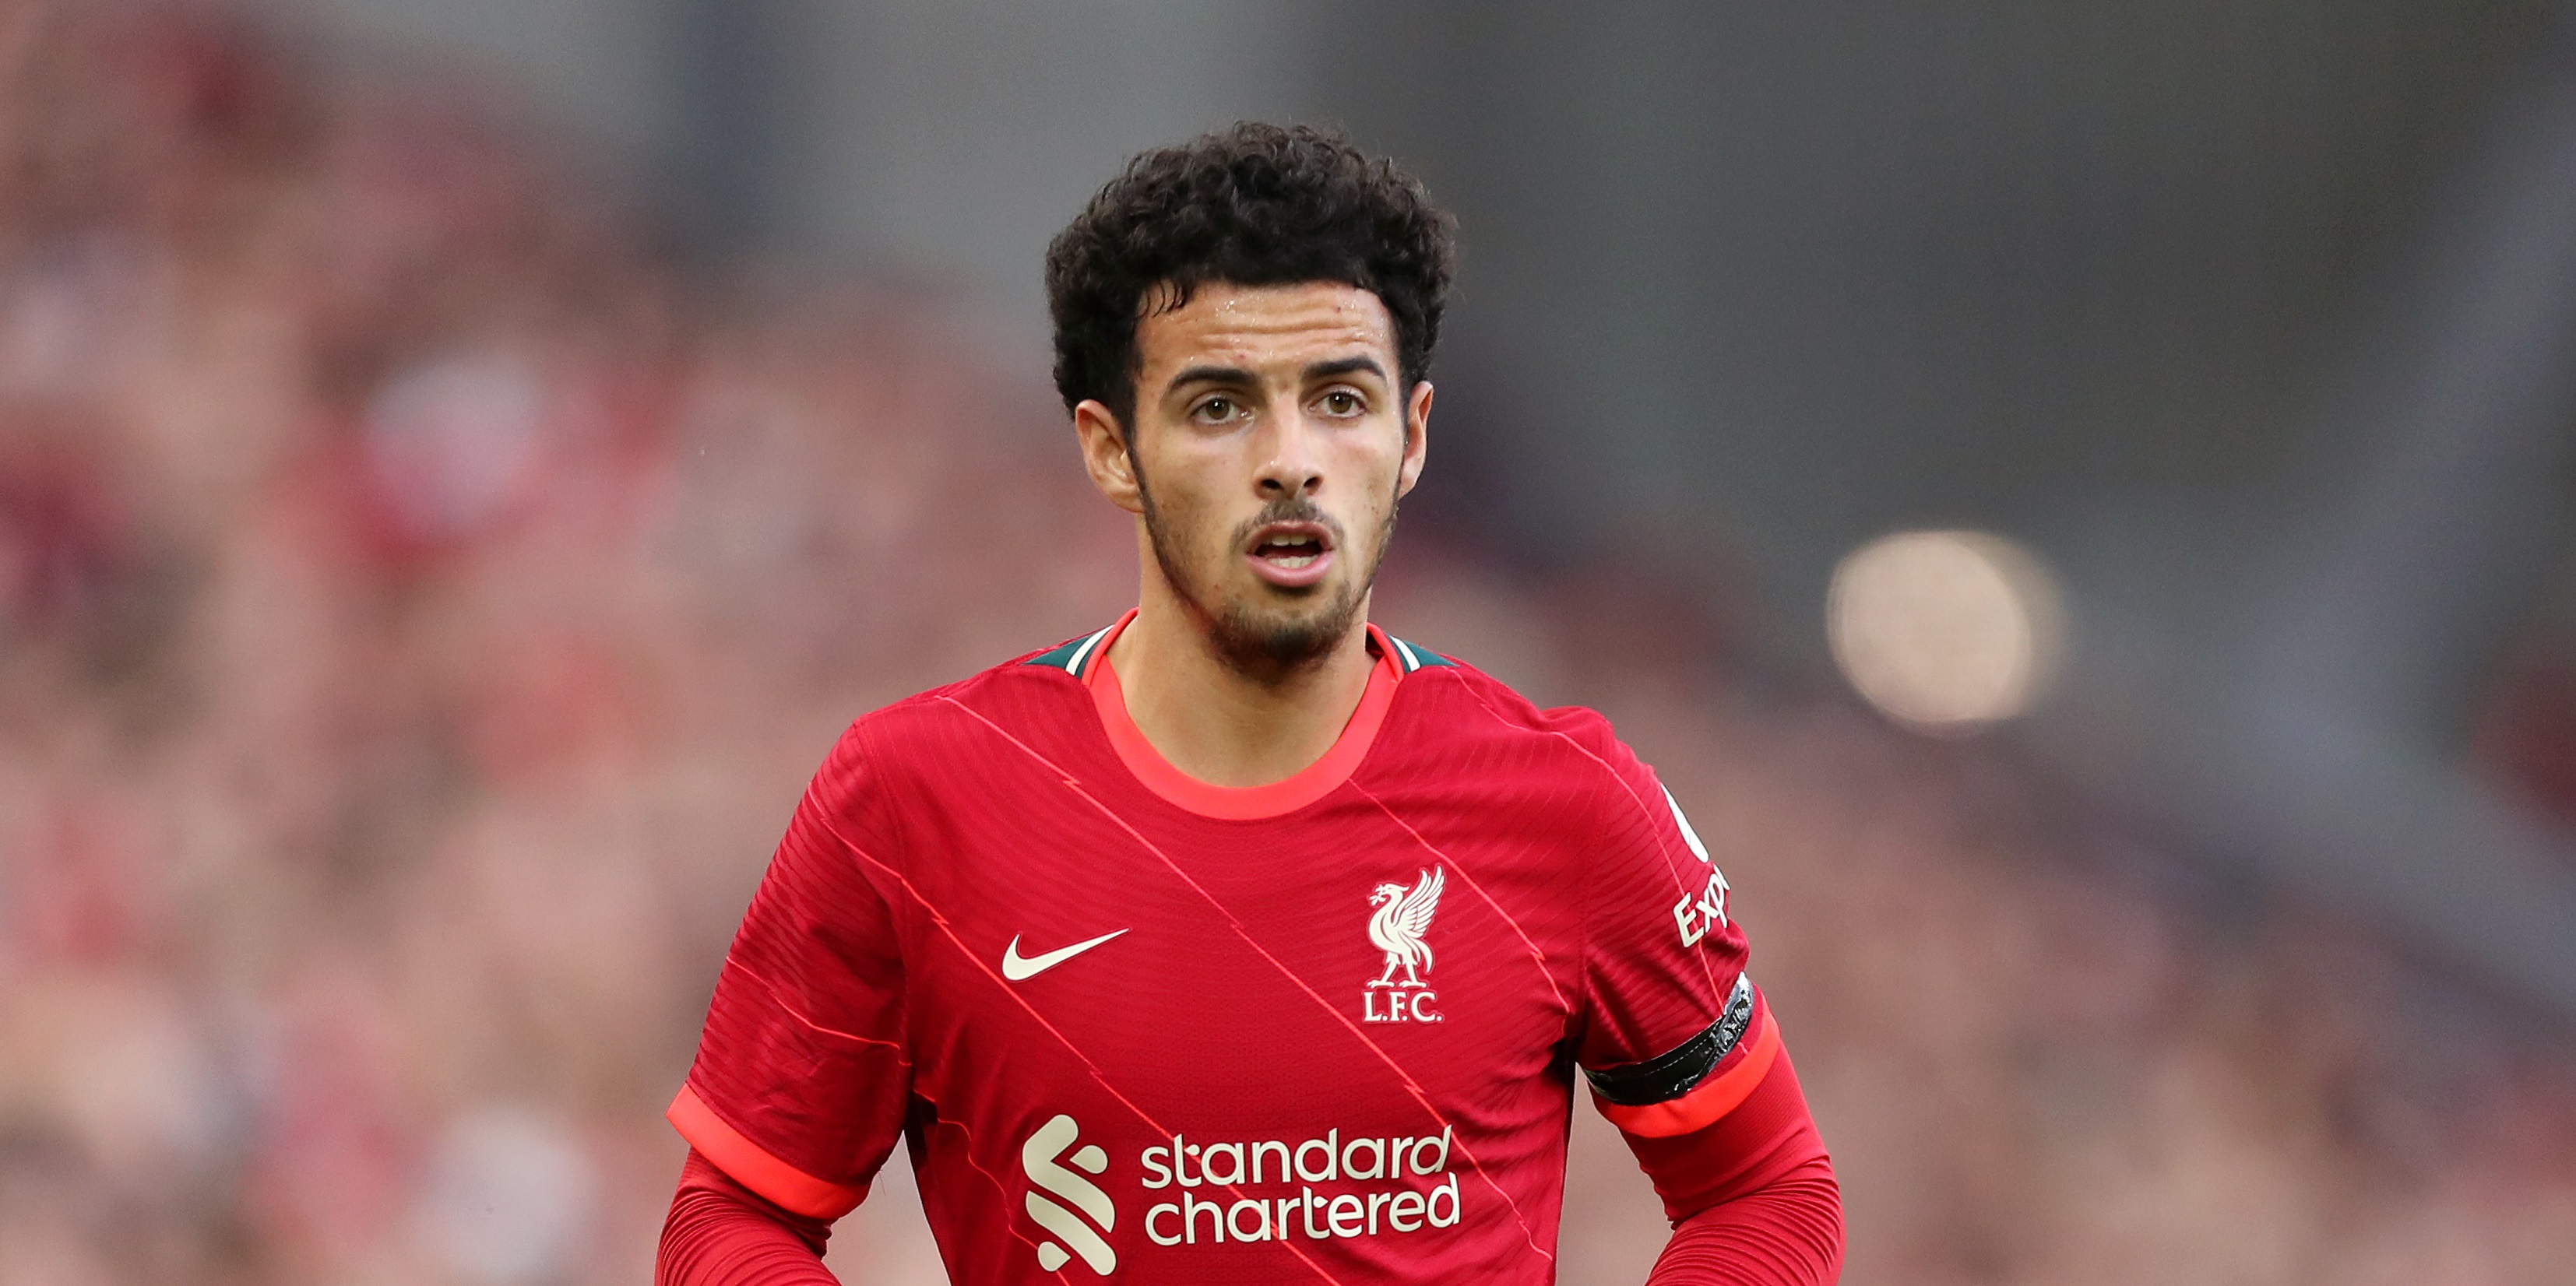 Club doctor shares fresh injury update on Liverpool midfielder: “It won’t be a speedy return”